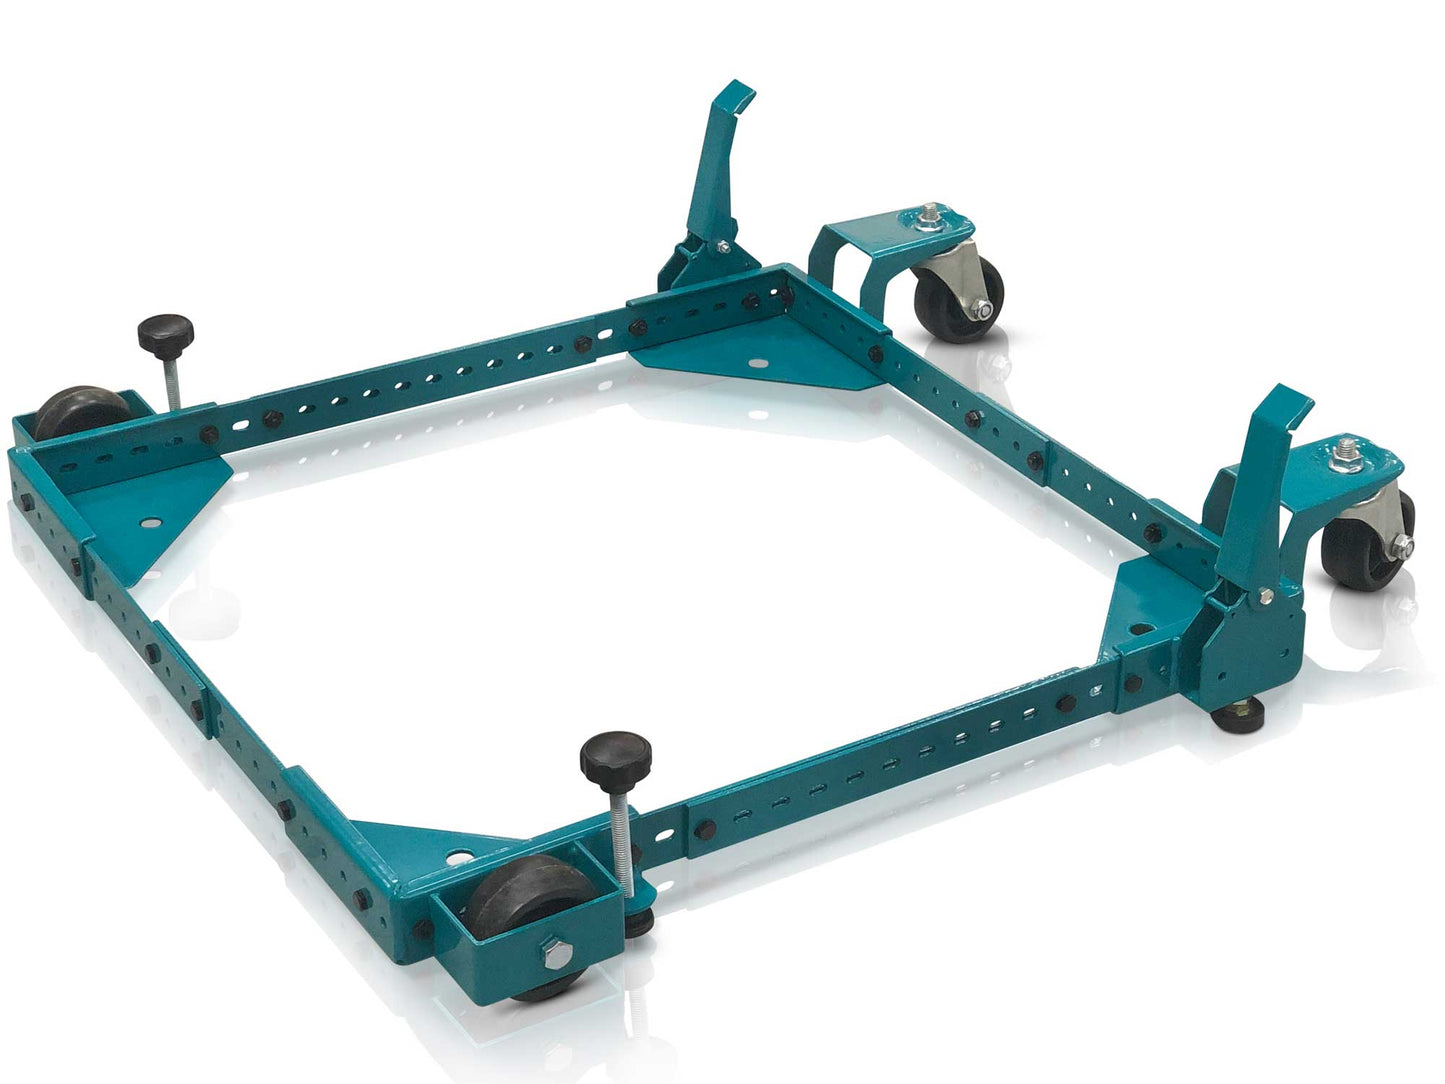 Adjustable Wheel Kit 355-960mm Foot Lever Lock